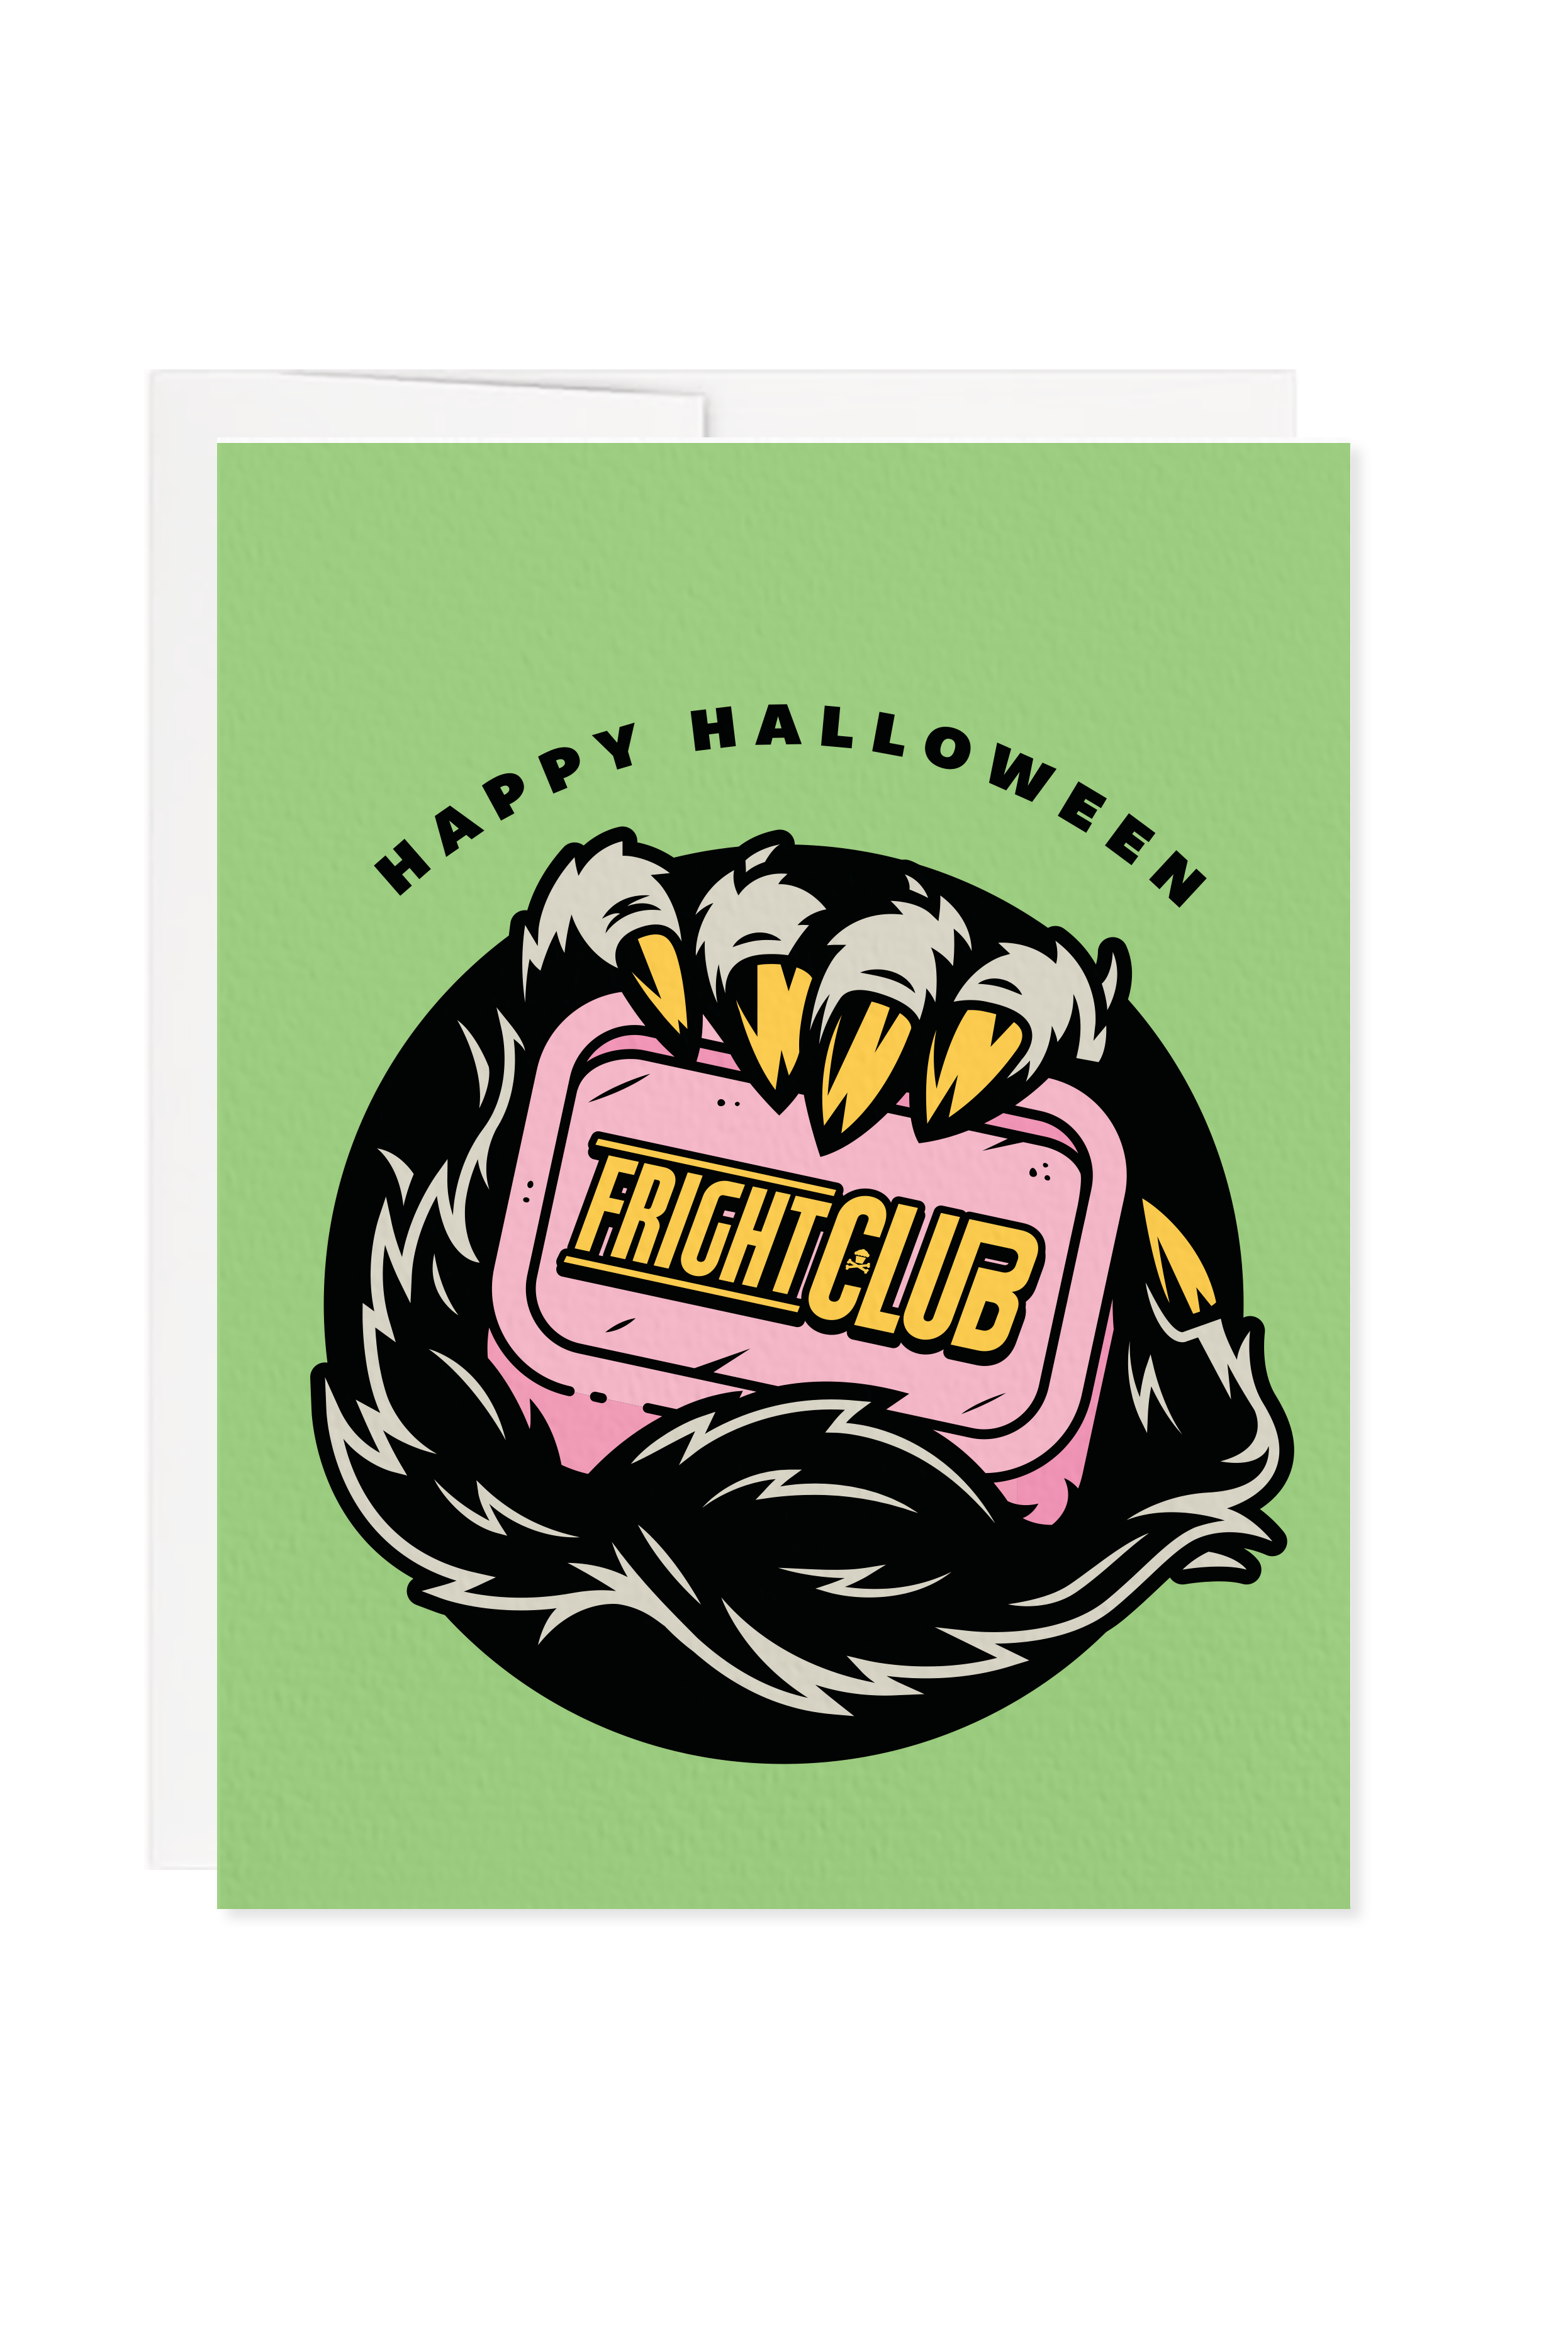 Fright Club Halloween Greeting Card